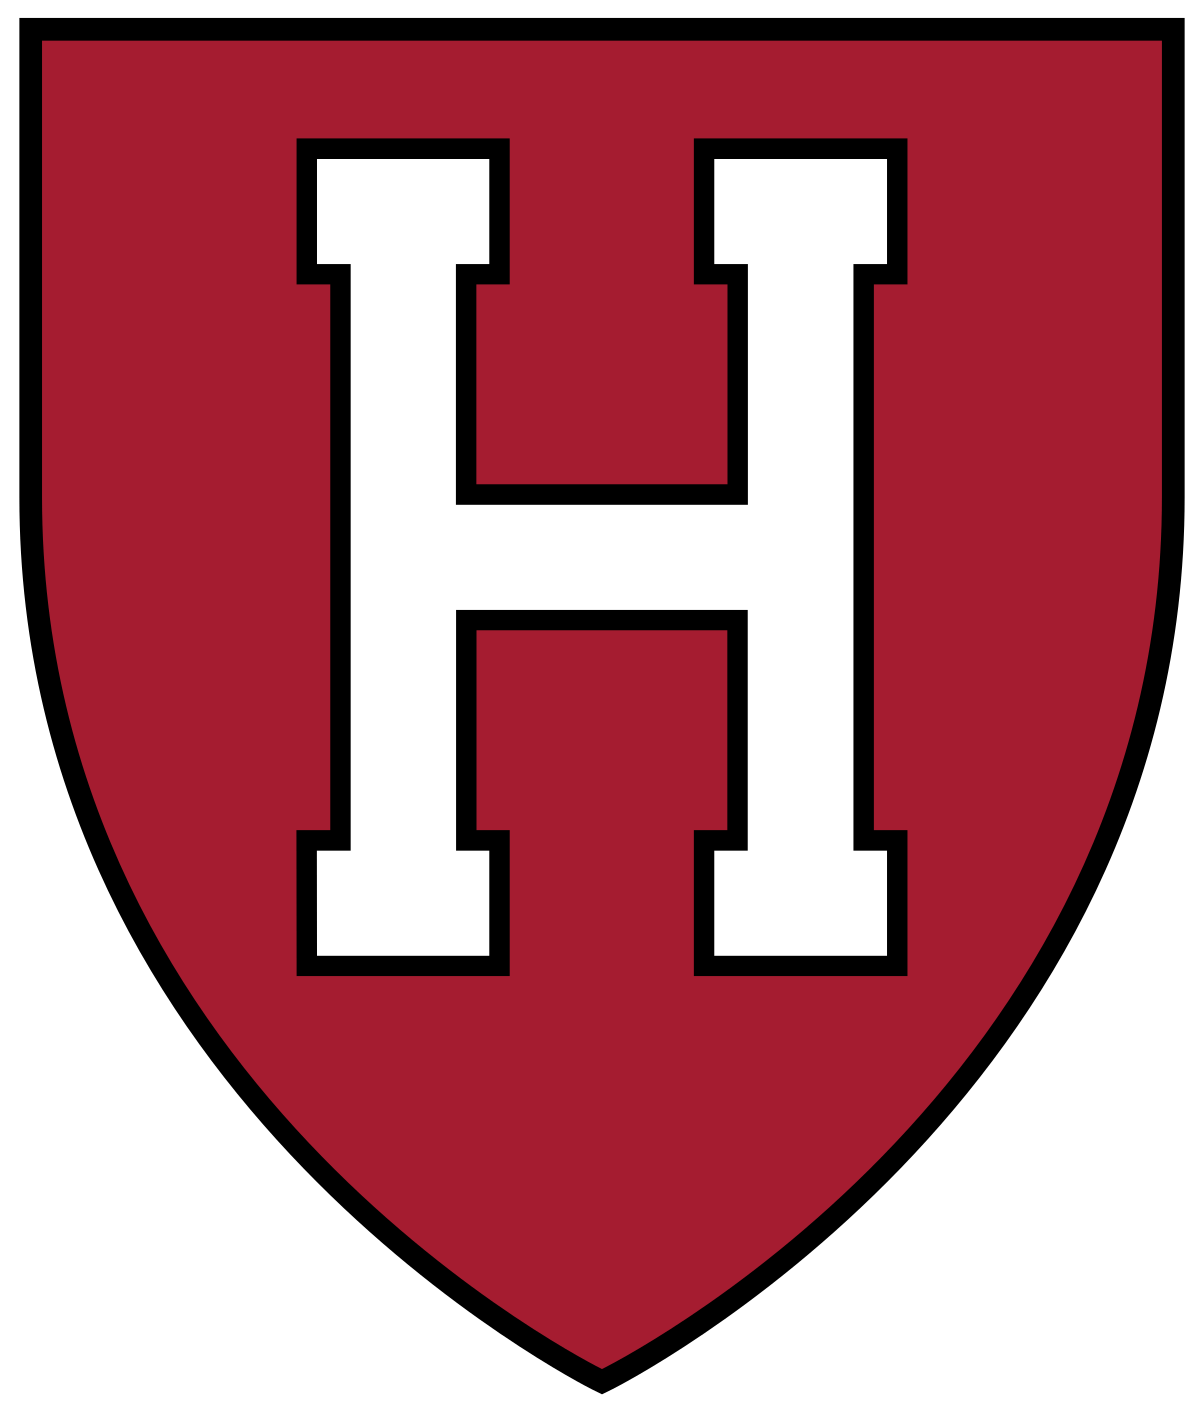 Harvard Basketball Logo - Harvard Crimson men's basketball